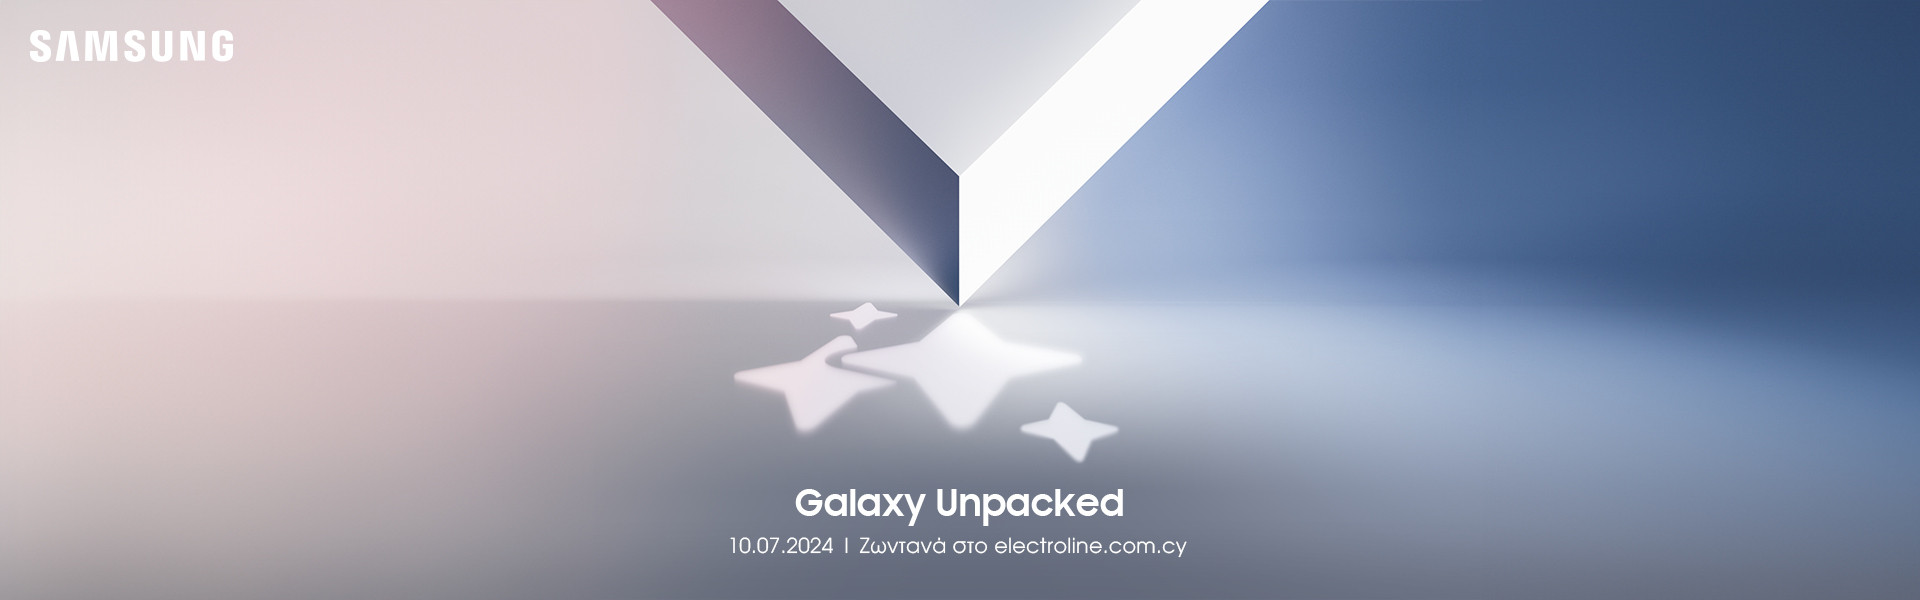 Main Banner Samsung Galaxy Unpacked